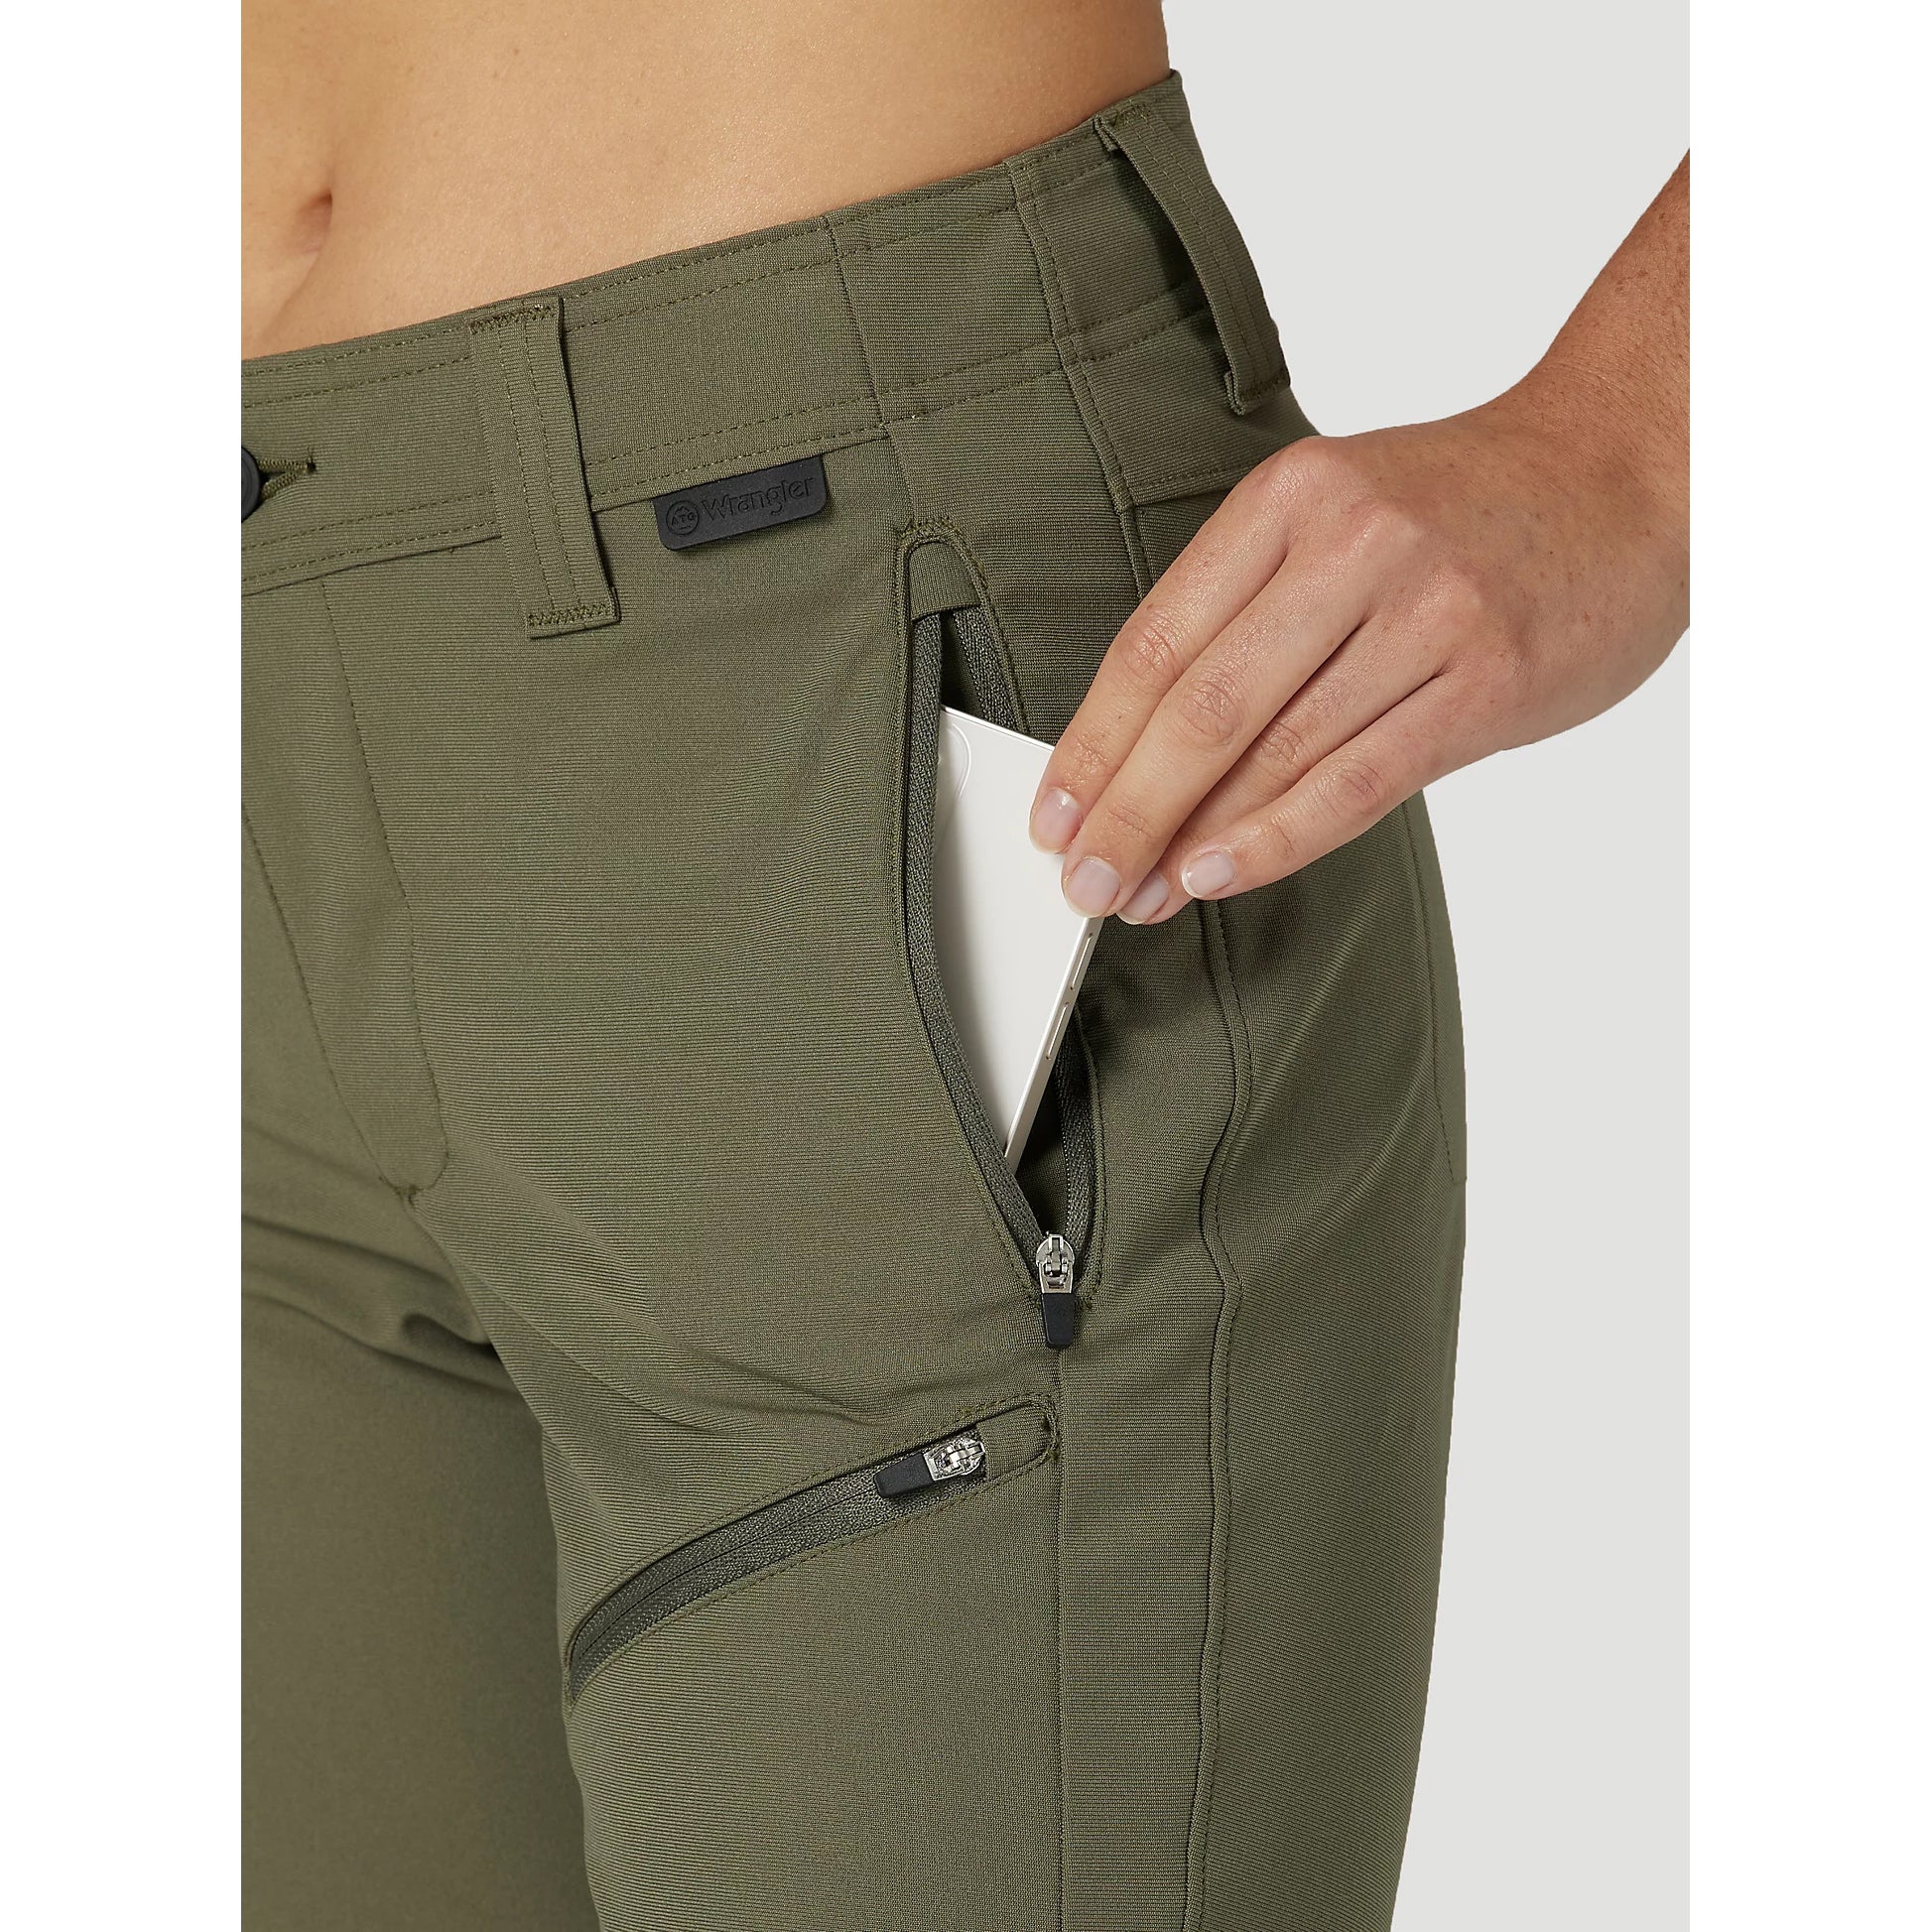 Wrangler LA320DV All Terrain Shorts in Dusty Olive Pocket Detail